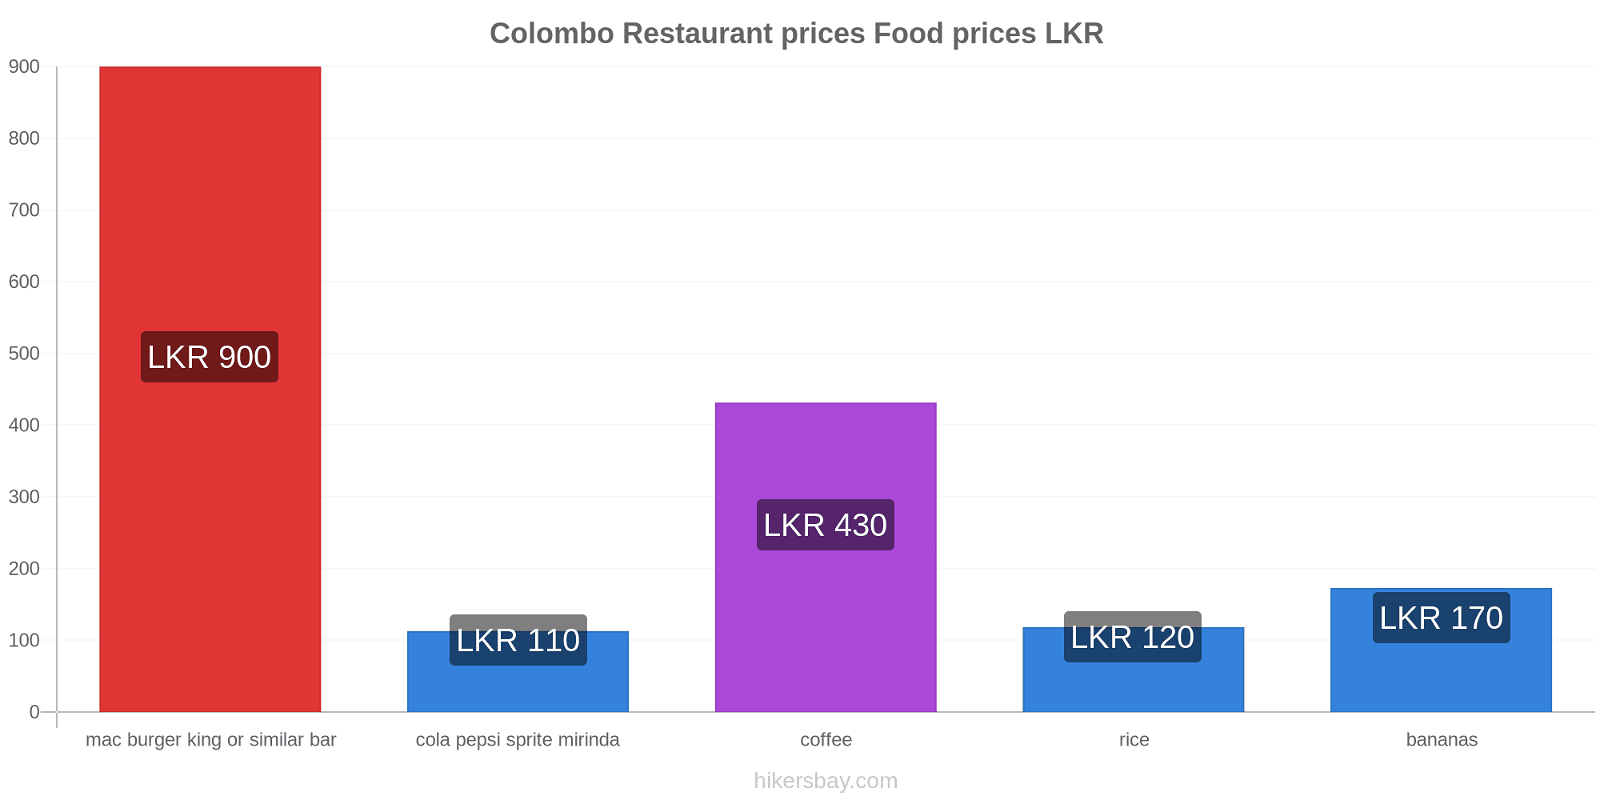 Colombo price changes hikersbay.com